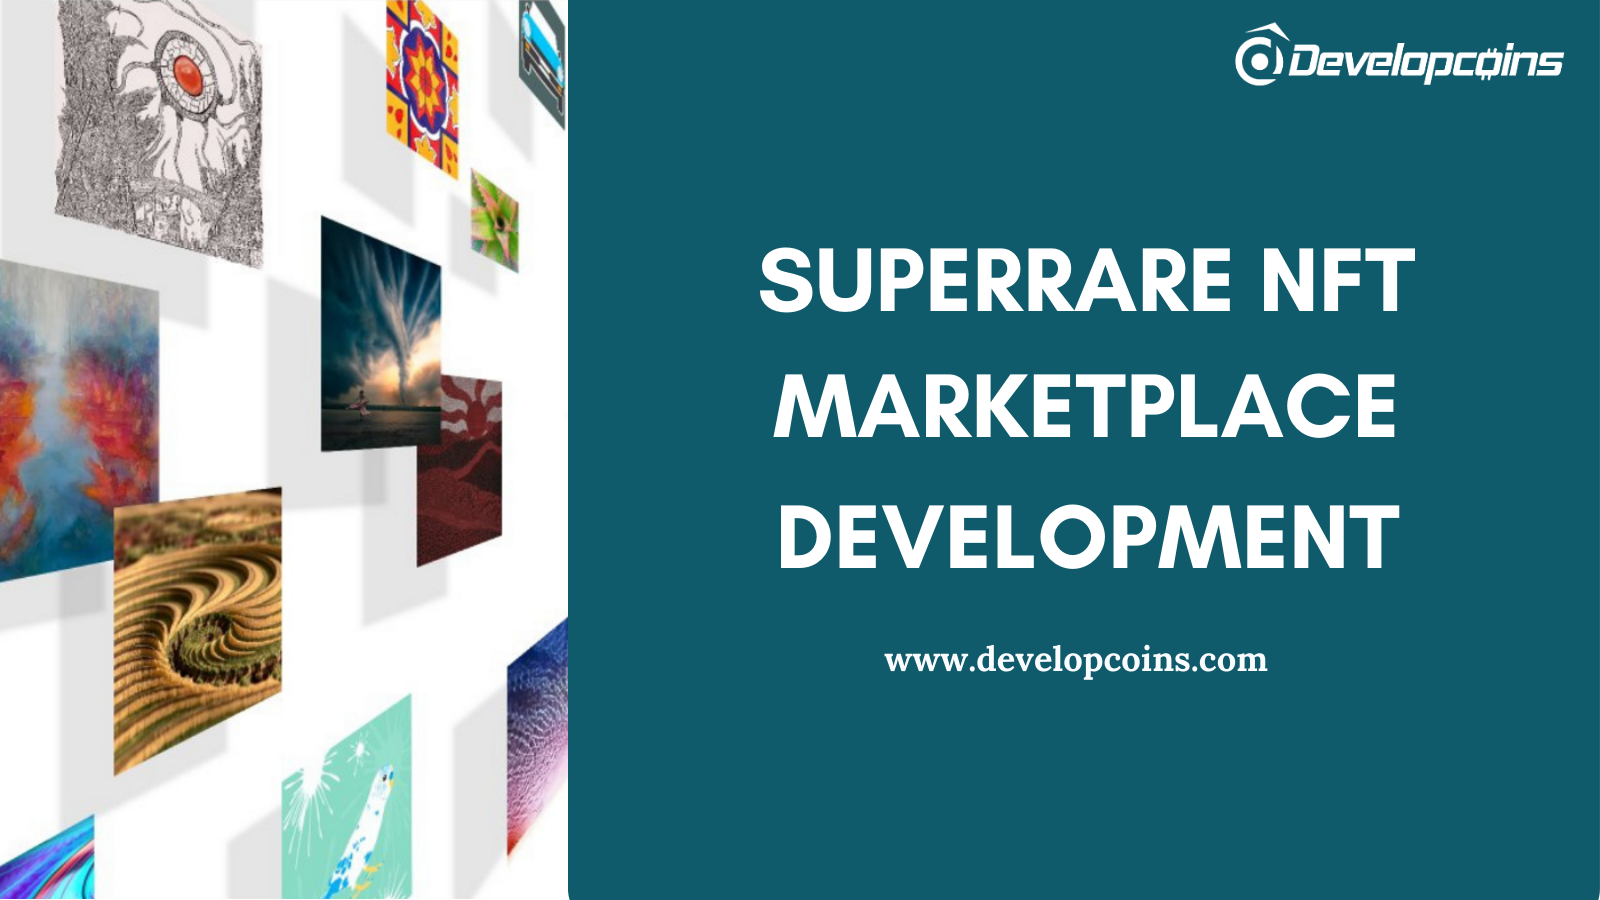 SuperRare NFT Marketplace Development To Launch Your Own Art Marketplace Platform